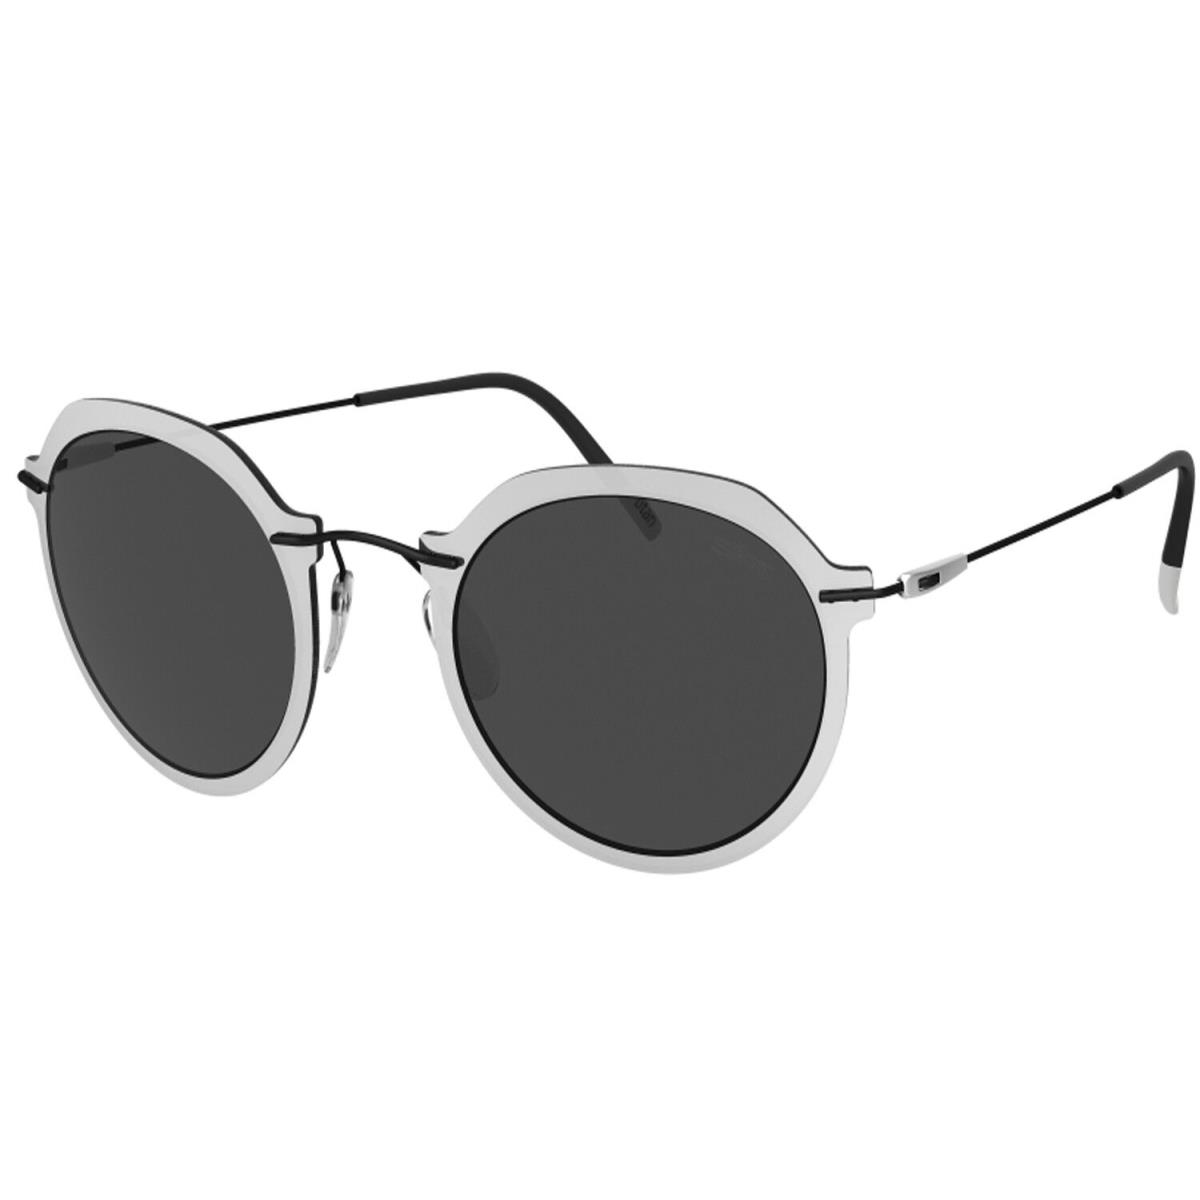 Silhouette Infinity Sunglasses Black Matte Grey Silver Lenses 8695-75-9040